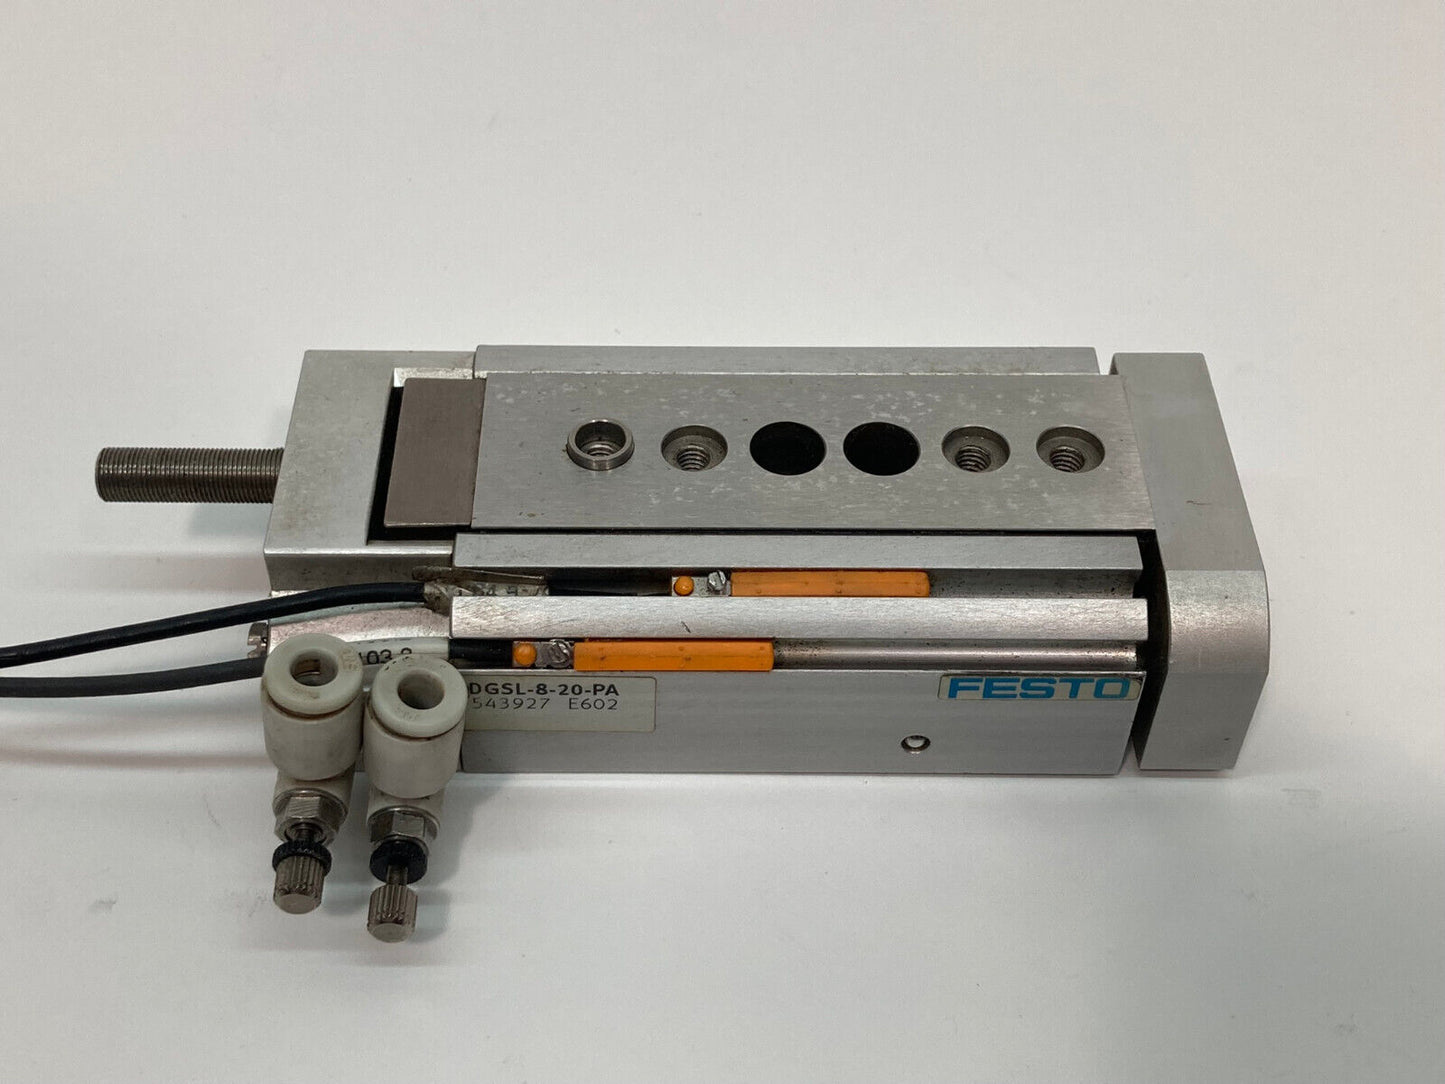 Festo DGSL-8-20-PA / 543927 Pneumatic Cylinder, Mini Slide